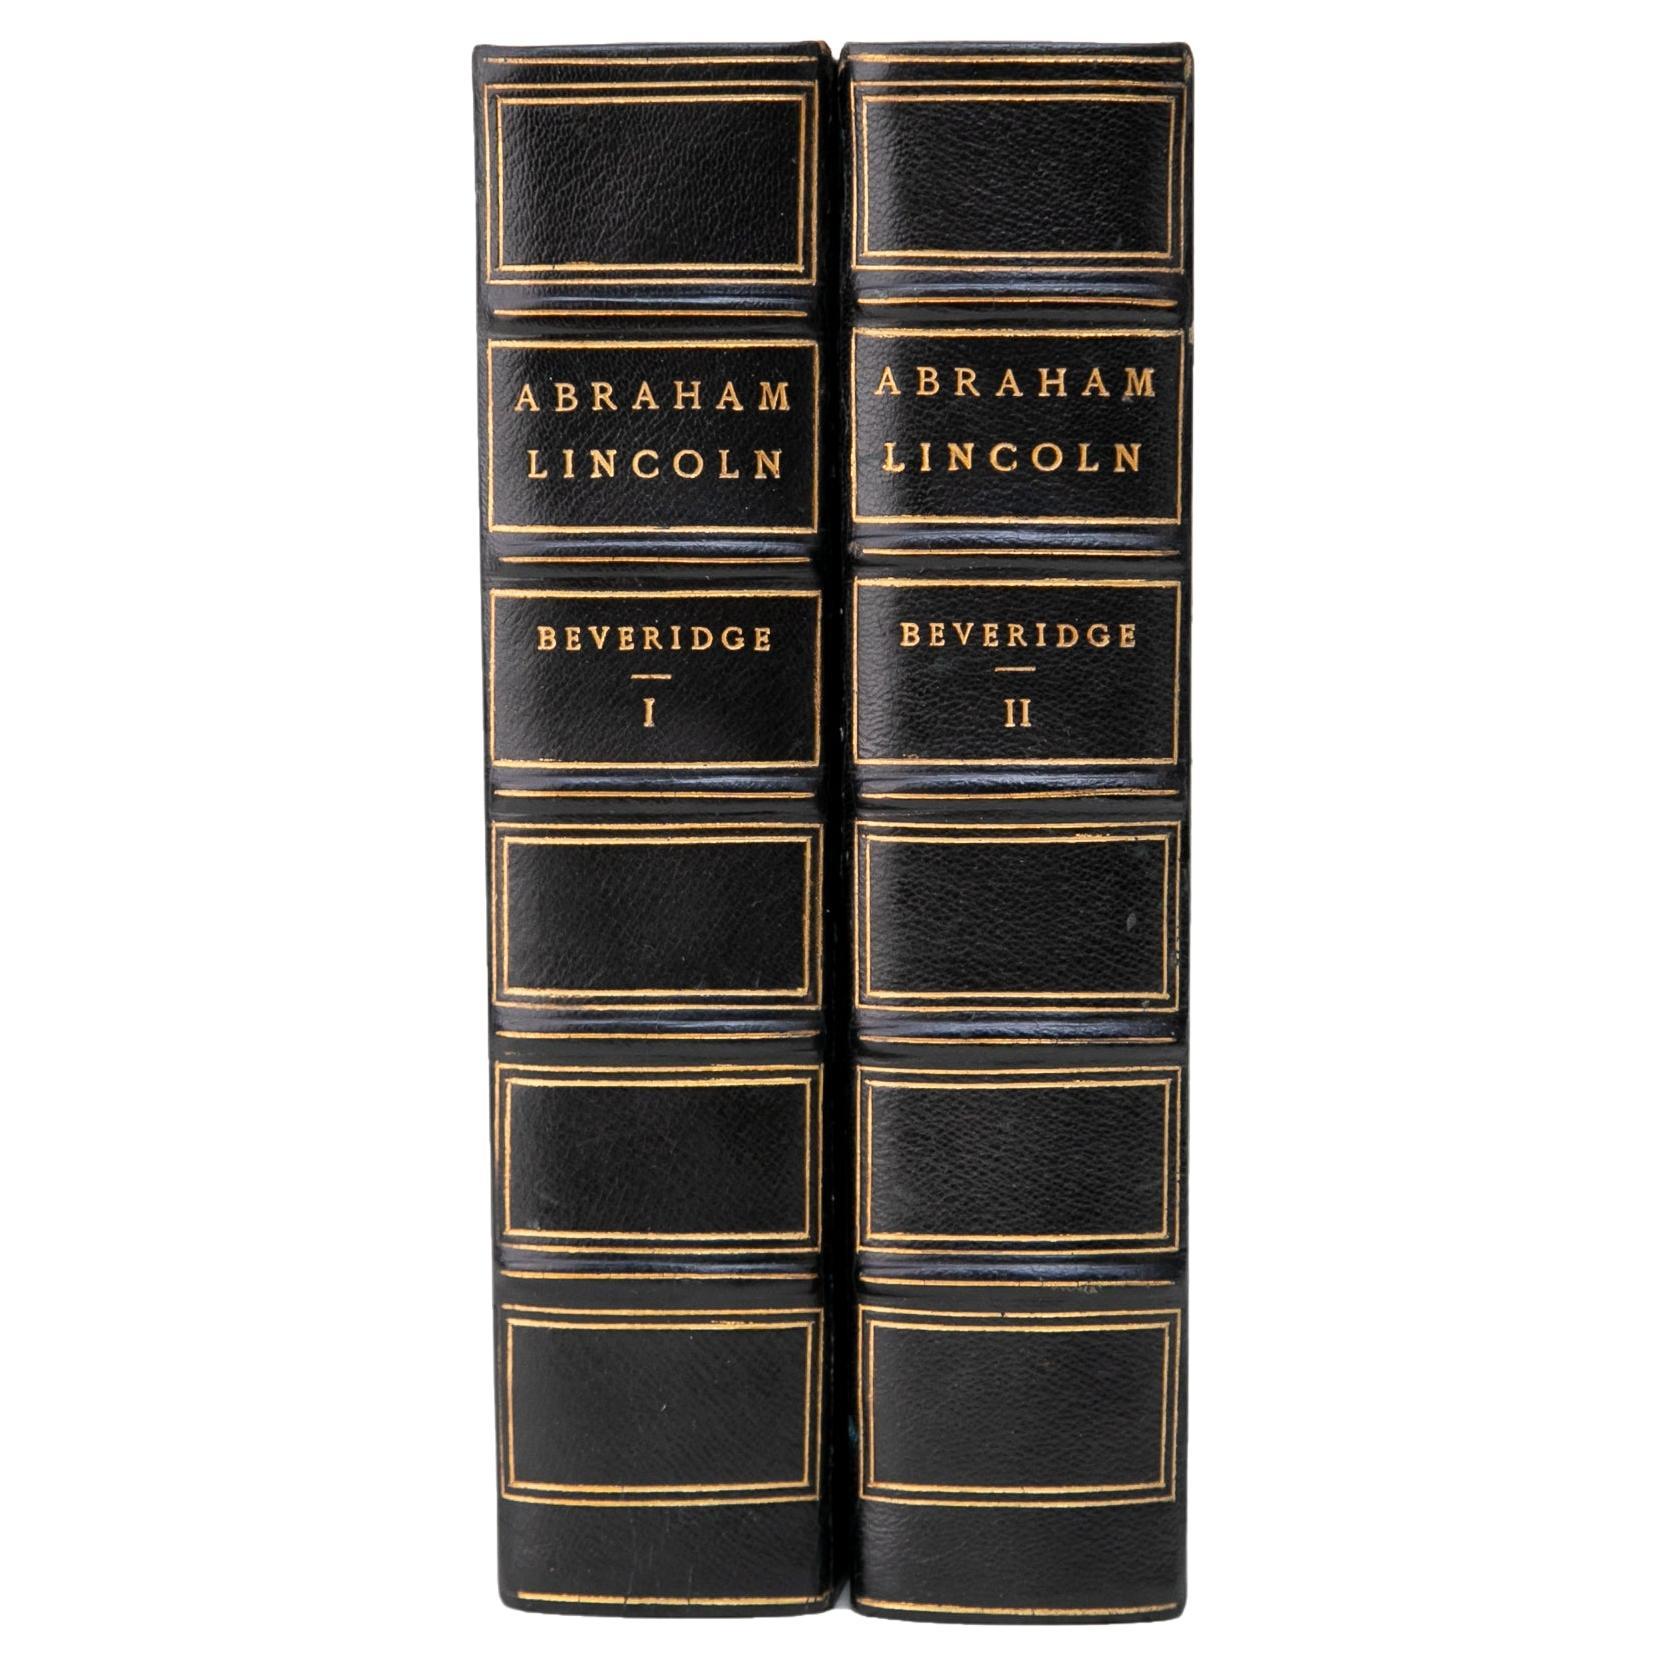 2 Volumes. Albert J. Beveridge, Abraham Lincoln.